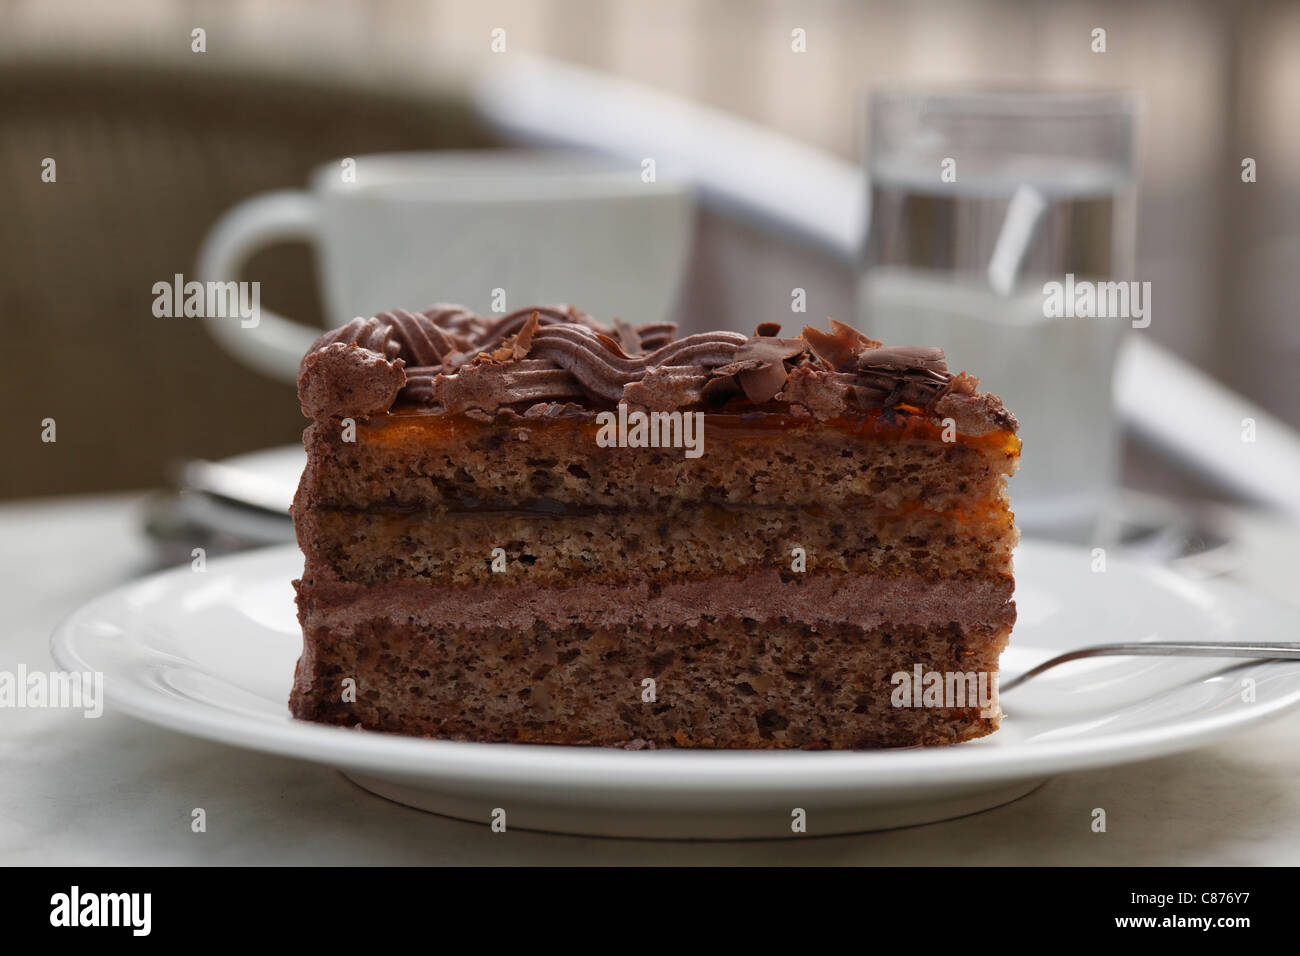 Austria, Wachau, Close up of cake slice in plate Stock Photo